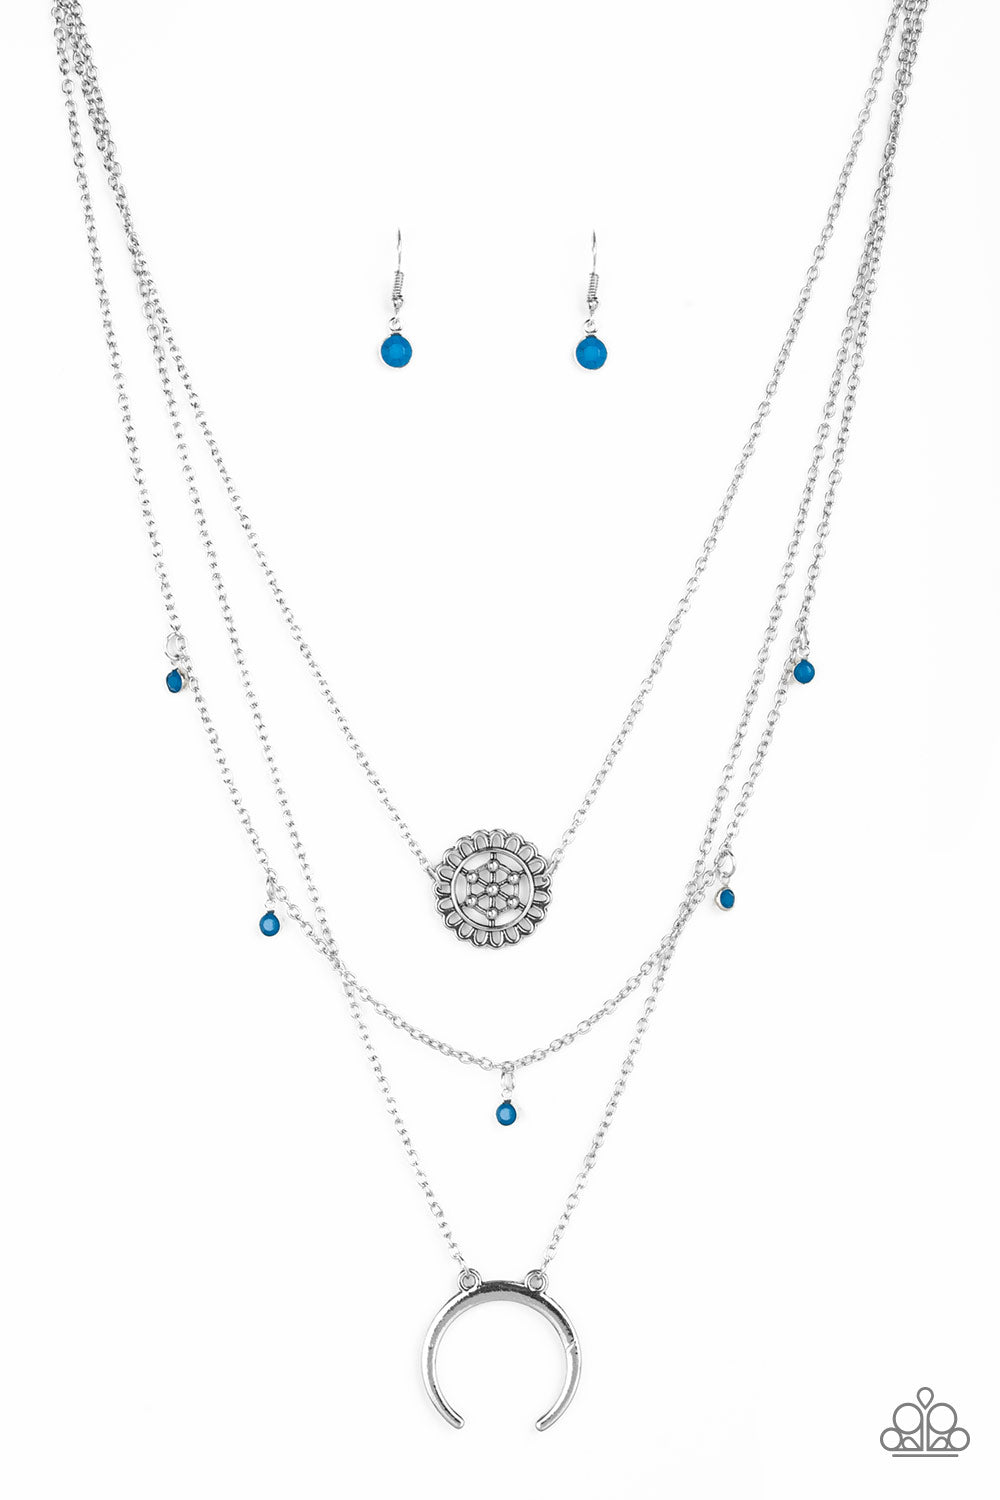 Lunar Lotus - Blue Necklace freeshipping - JewLz4u Gemstone Gallery